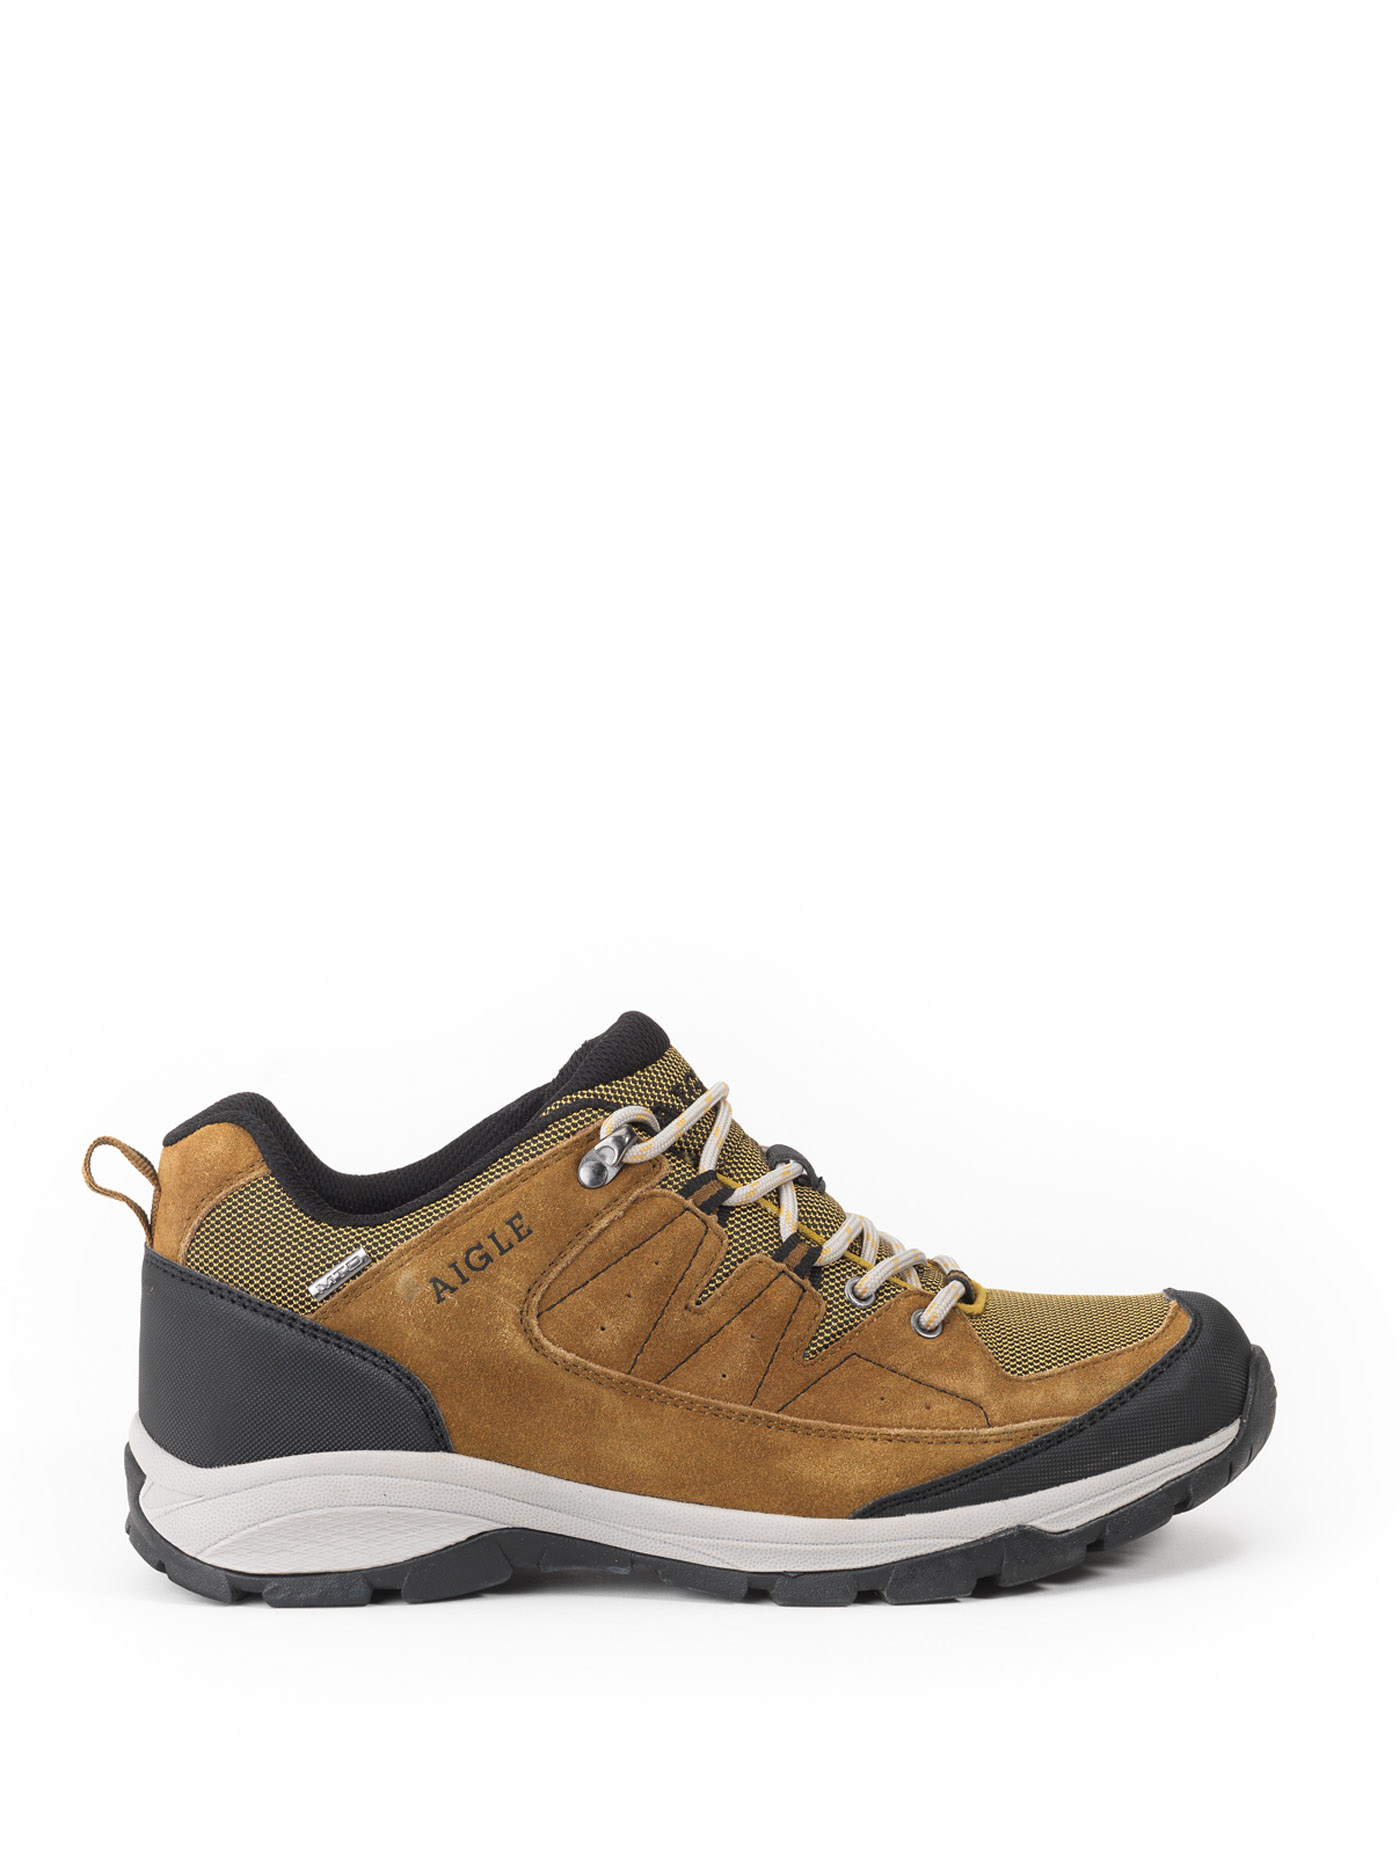 Aigle - Men's waterproof and windproof shoes Olive - Vedur lowmen | AIGLE